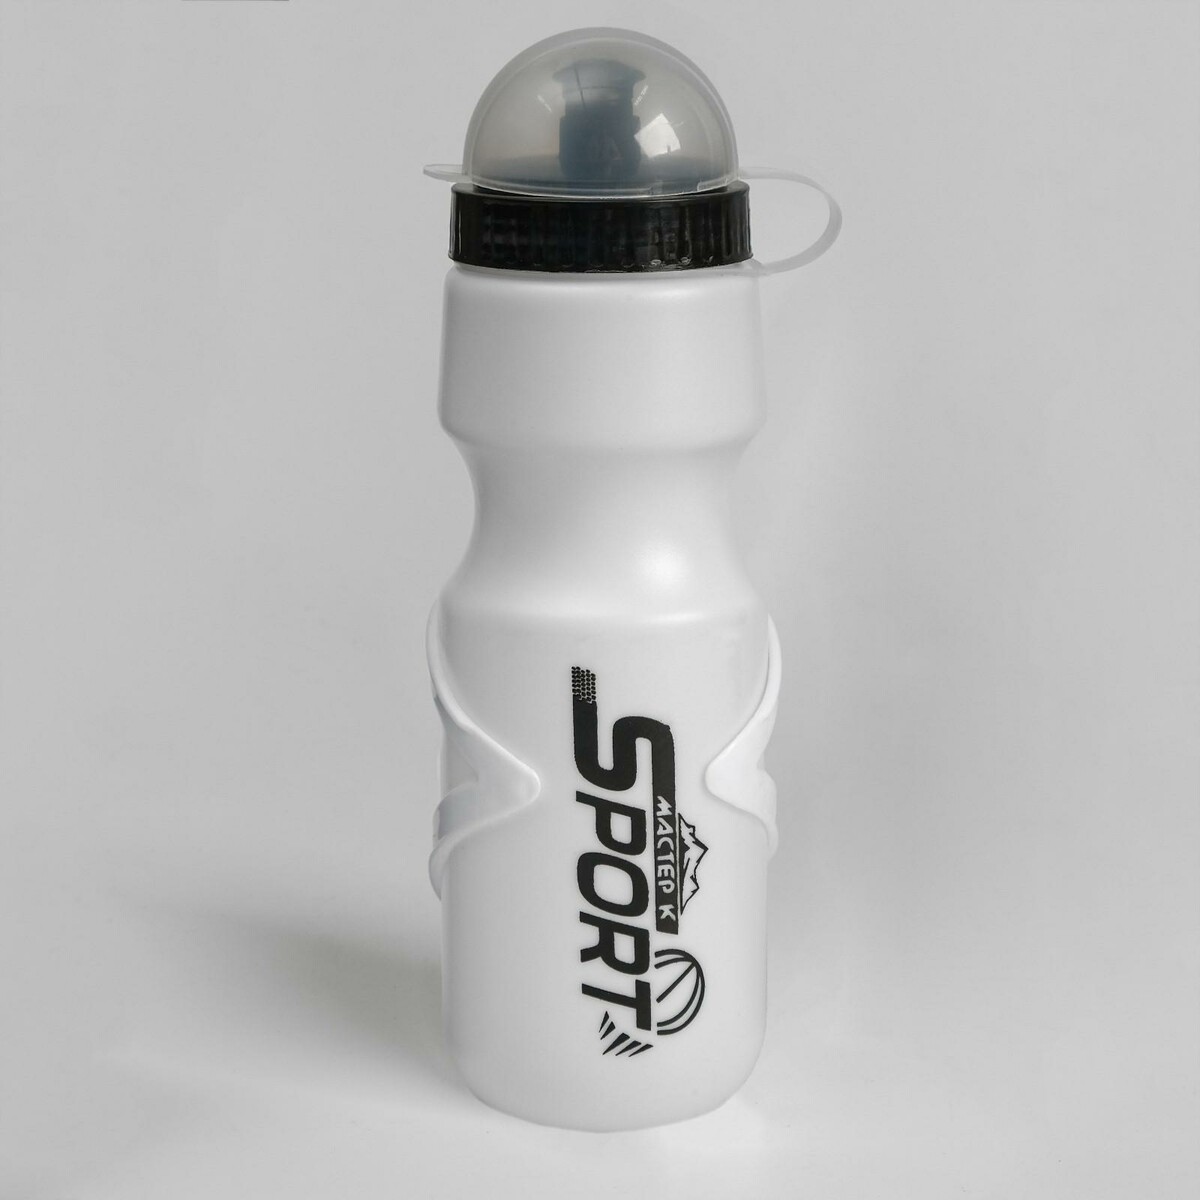 Бутылка для воды велосипедная миска двойная с автопоилкой съемная бутылка 28 х 23 х 20 5 см белая